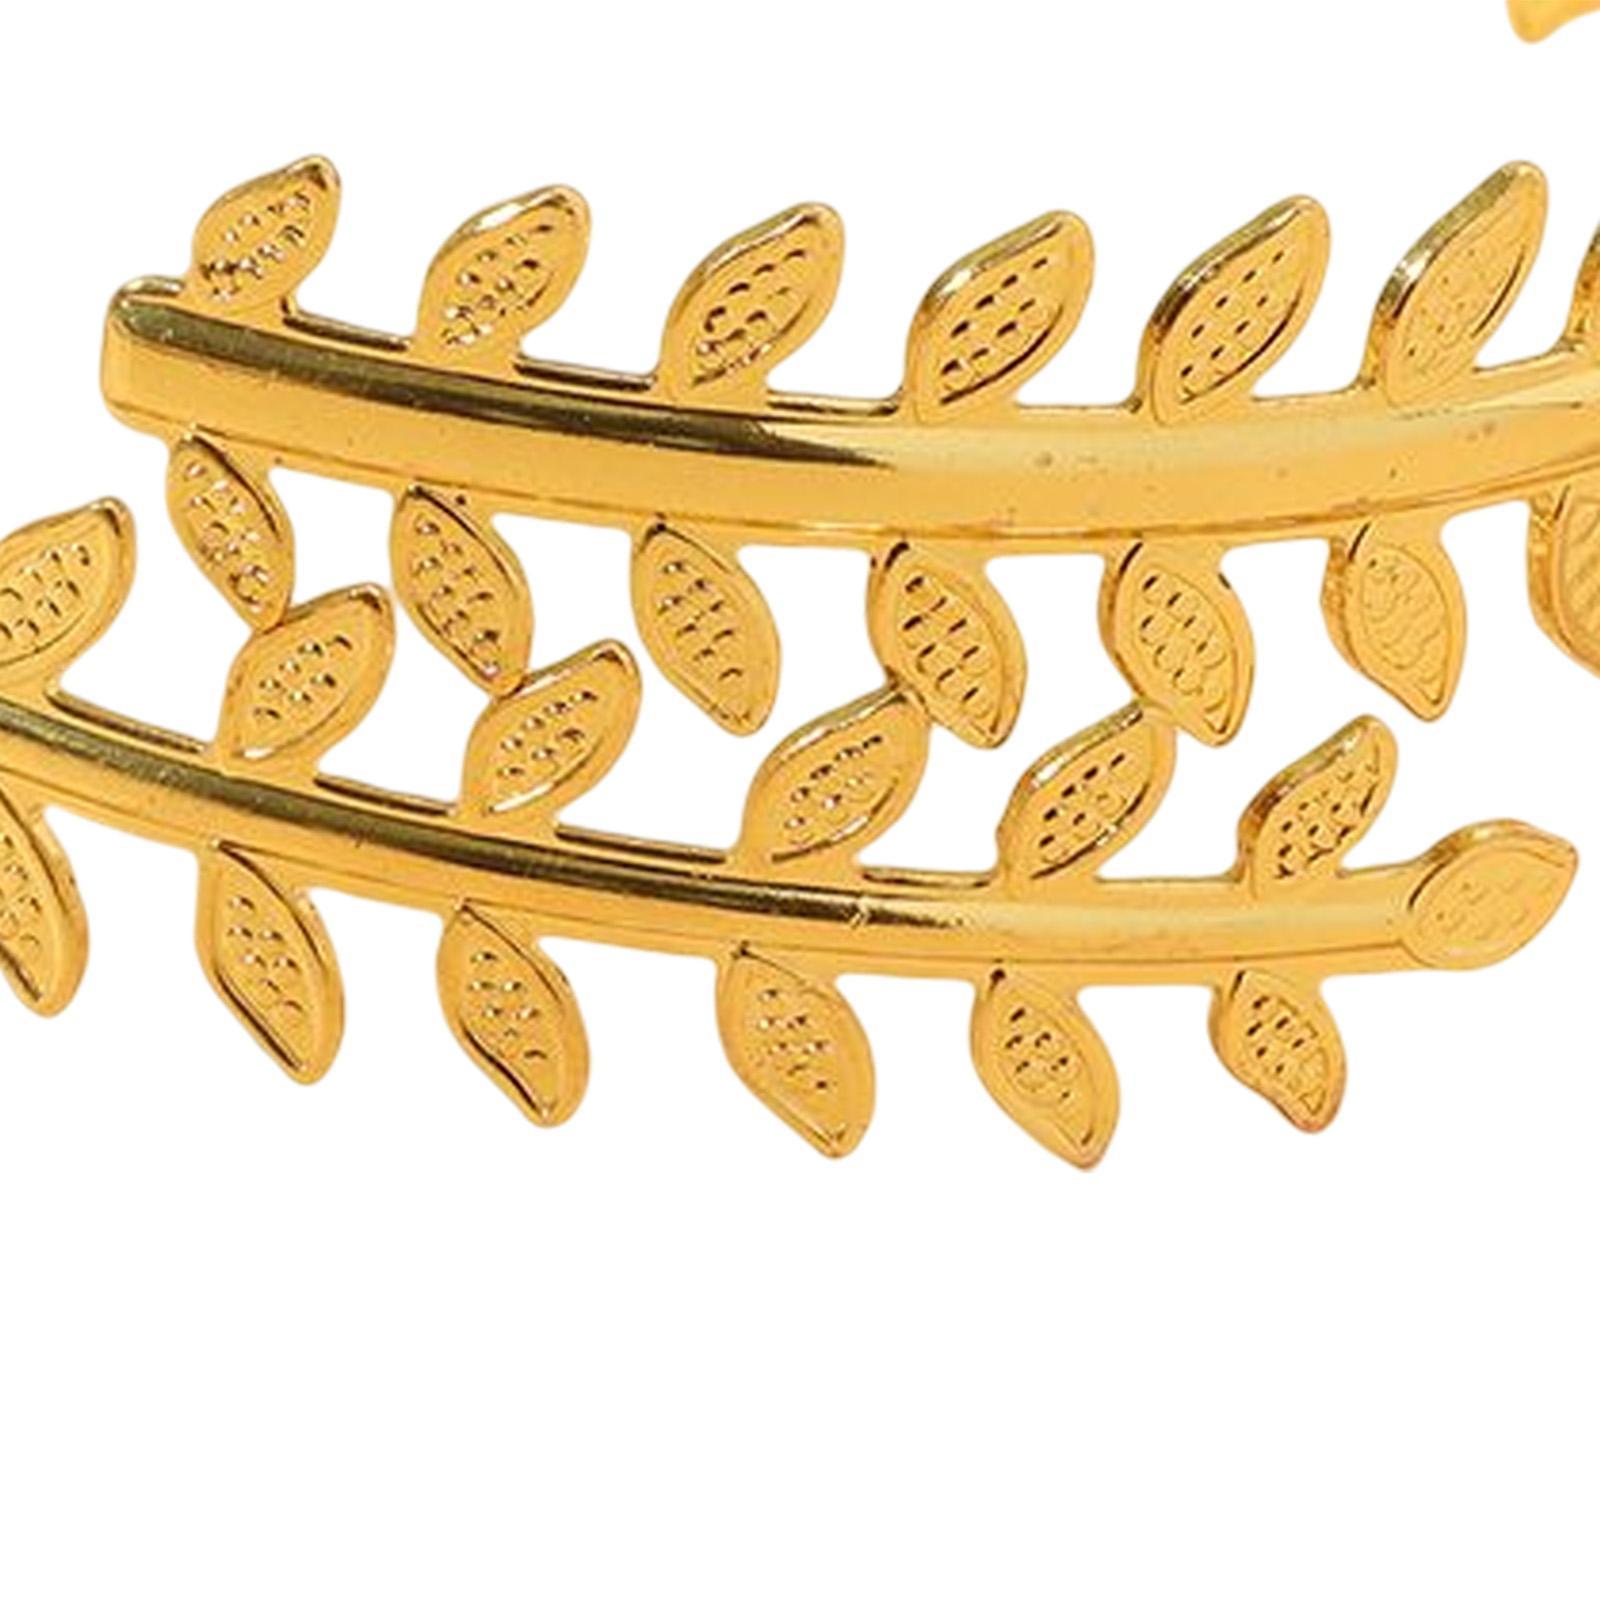 Leaf Feather Arm Bracelet Chain for Women Girls Open Upper Arm Bangle Armlet